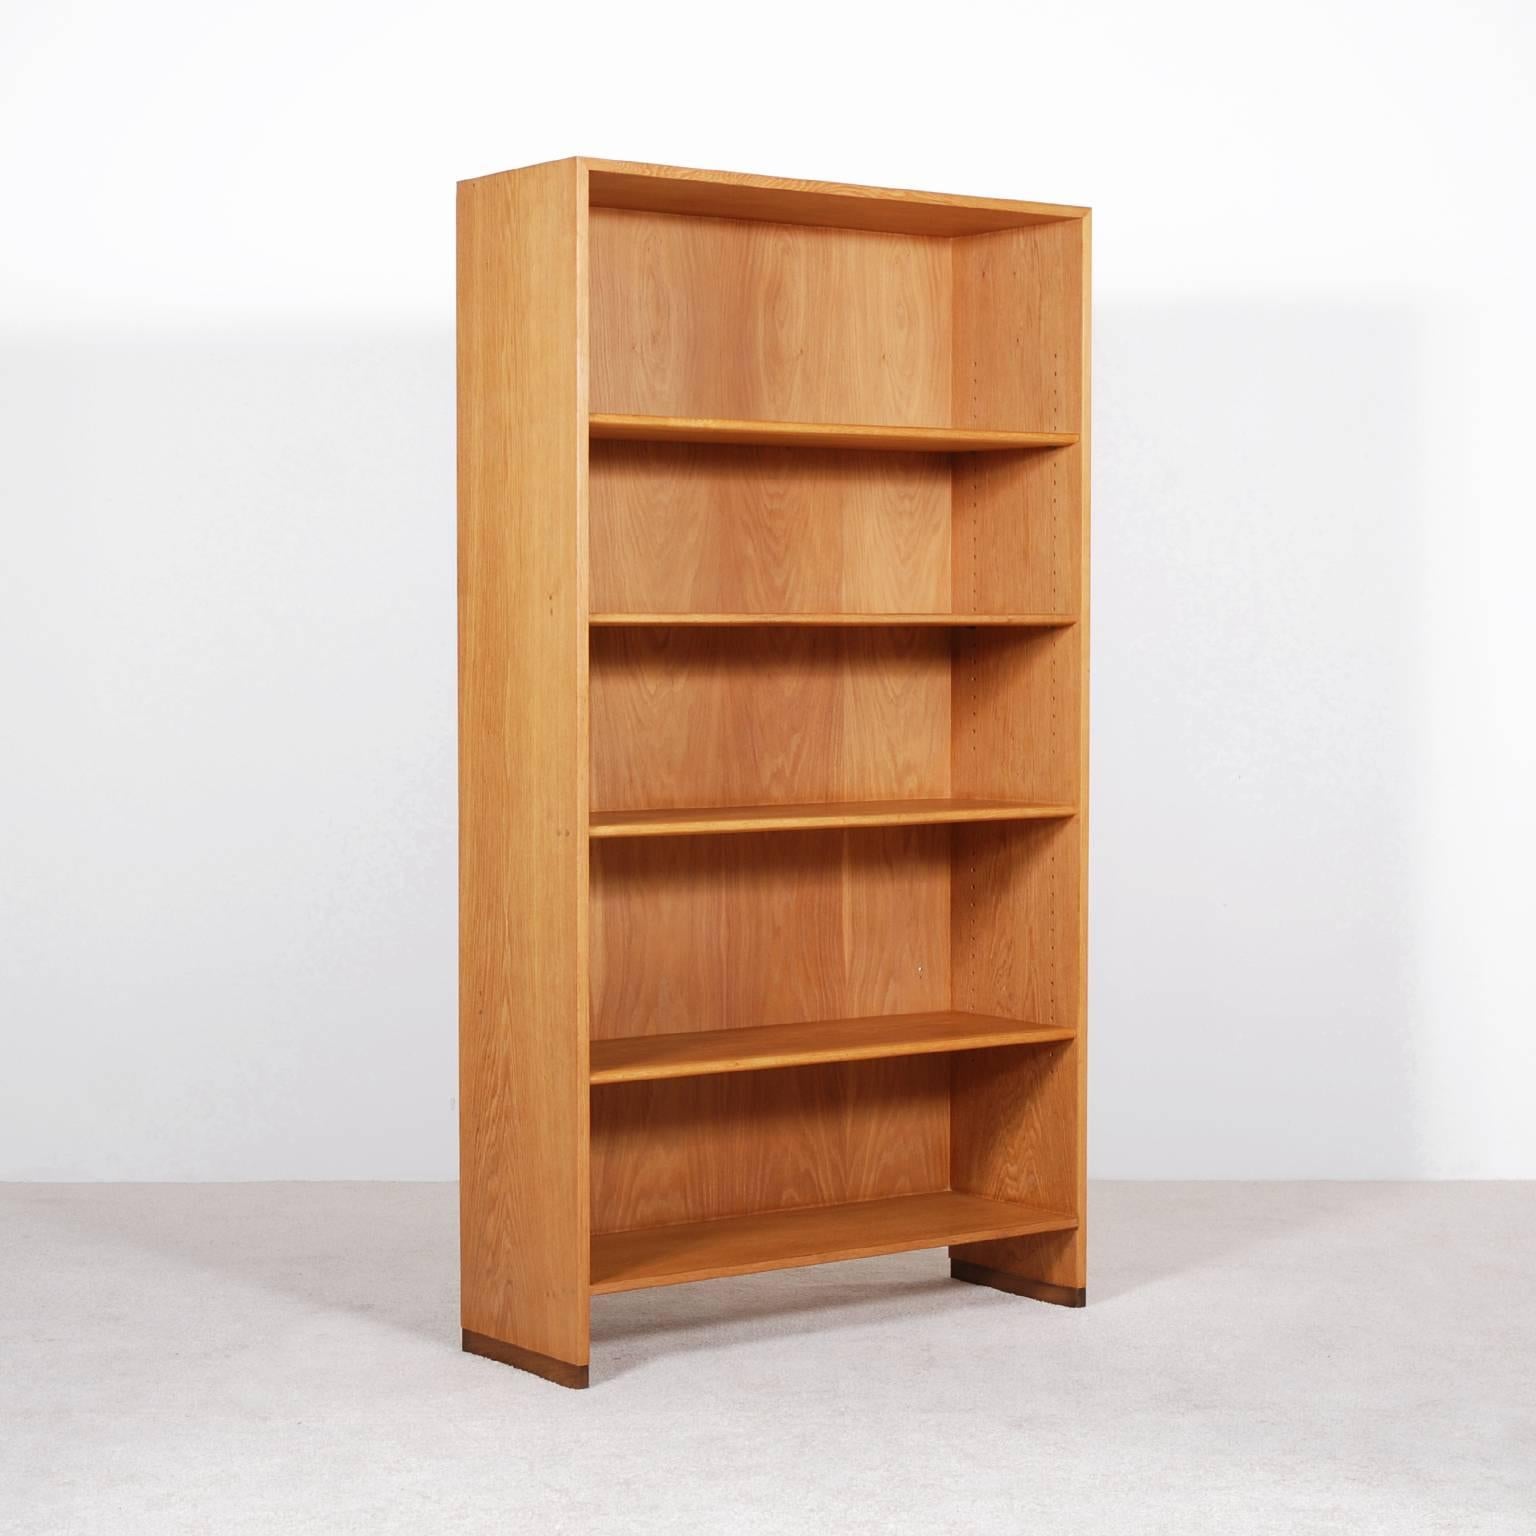 Oak bookcase designed by Hans Wegner for Ry Mobler, 1957.
Adjustable shelves.